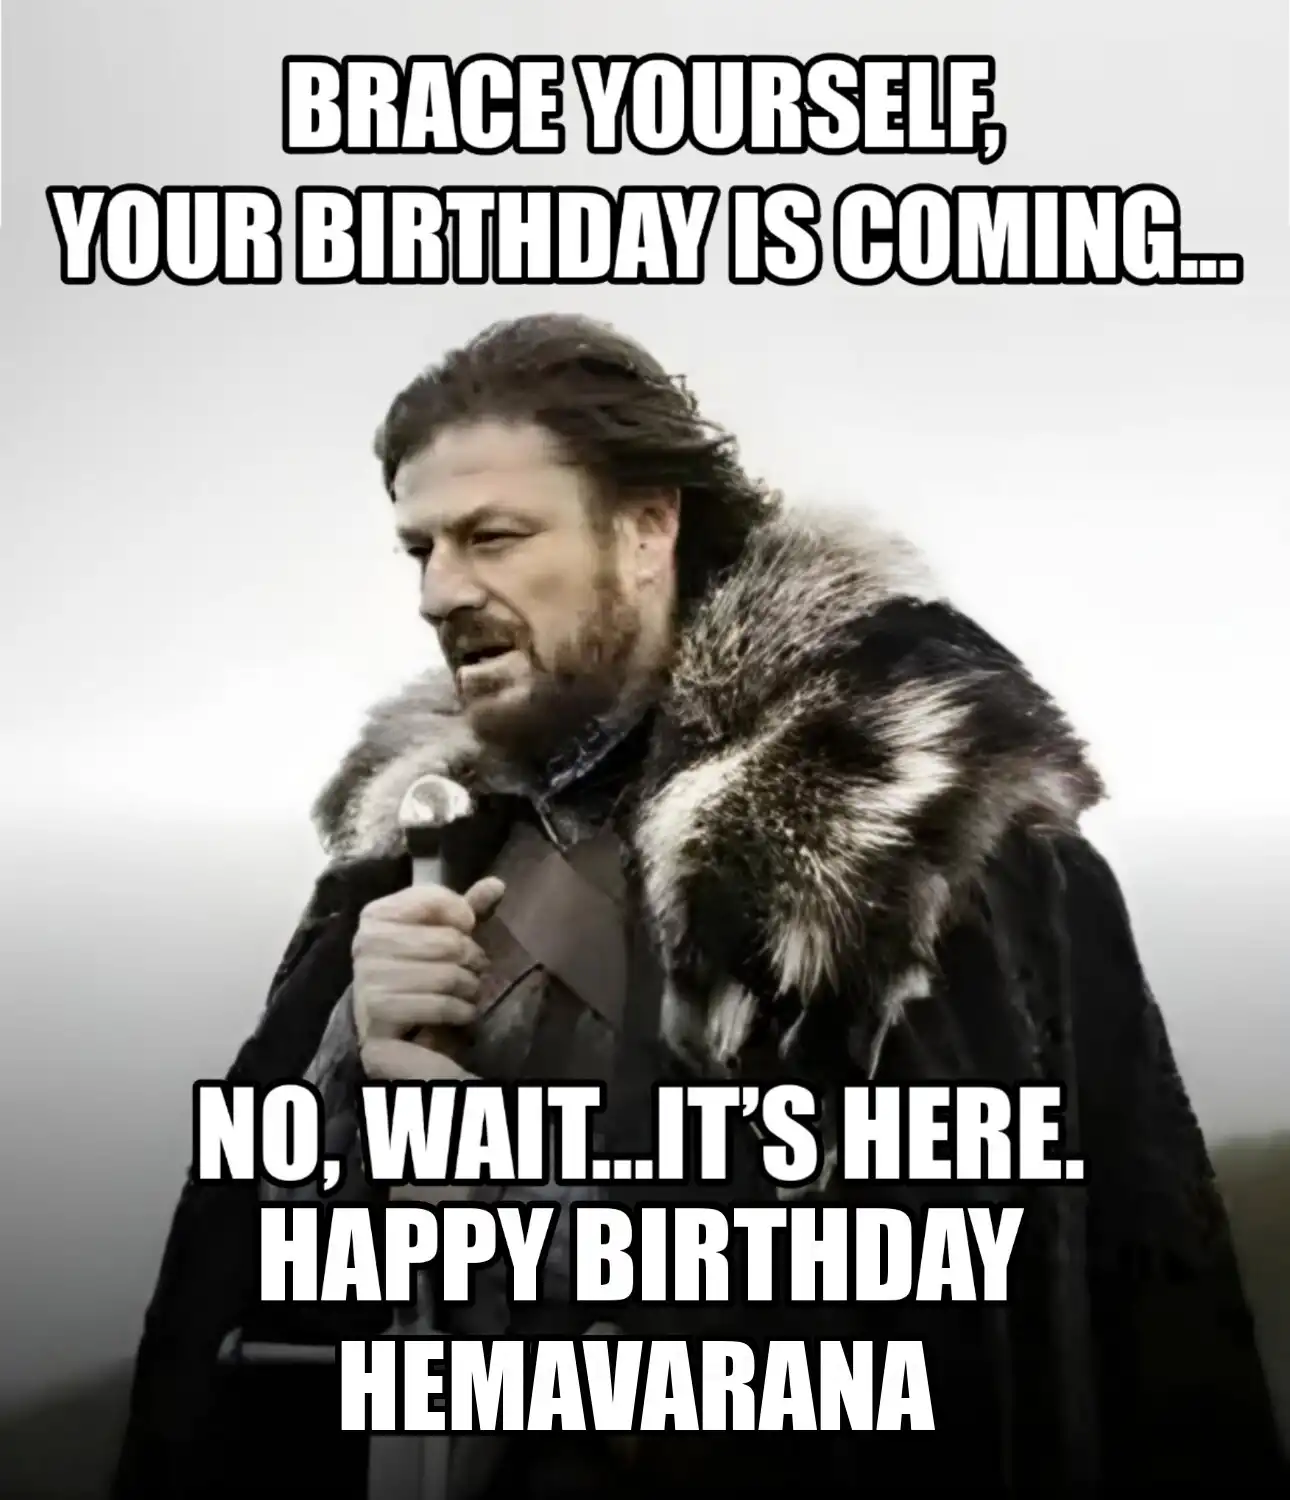 Happy Birthday Hemavarana Brace Yourself Your Birthday Is Coming Meme